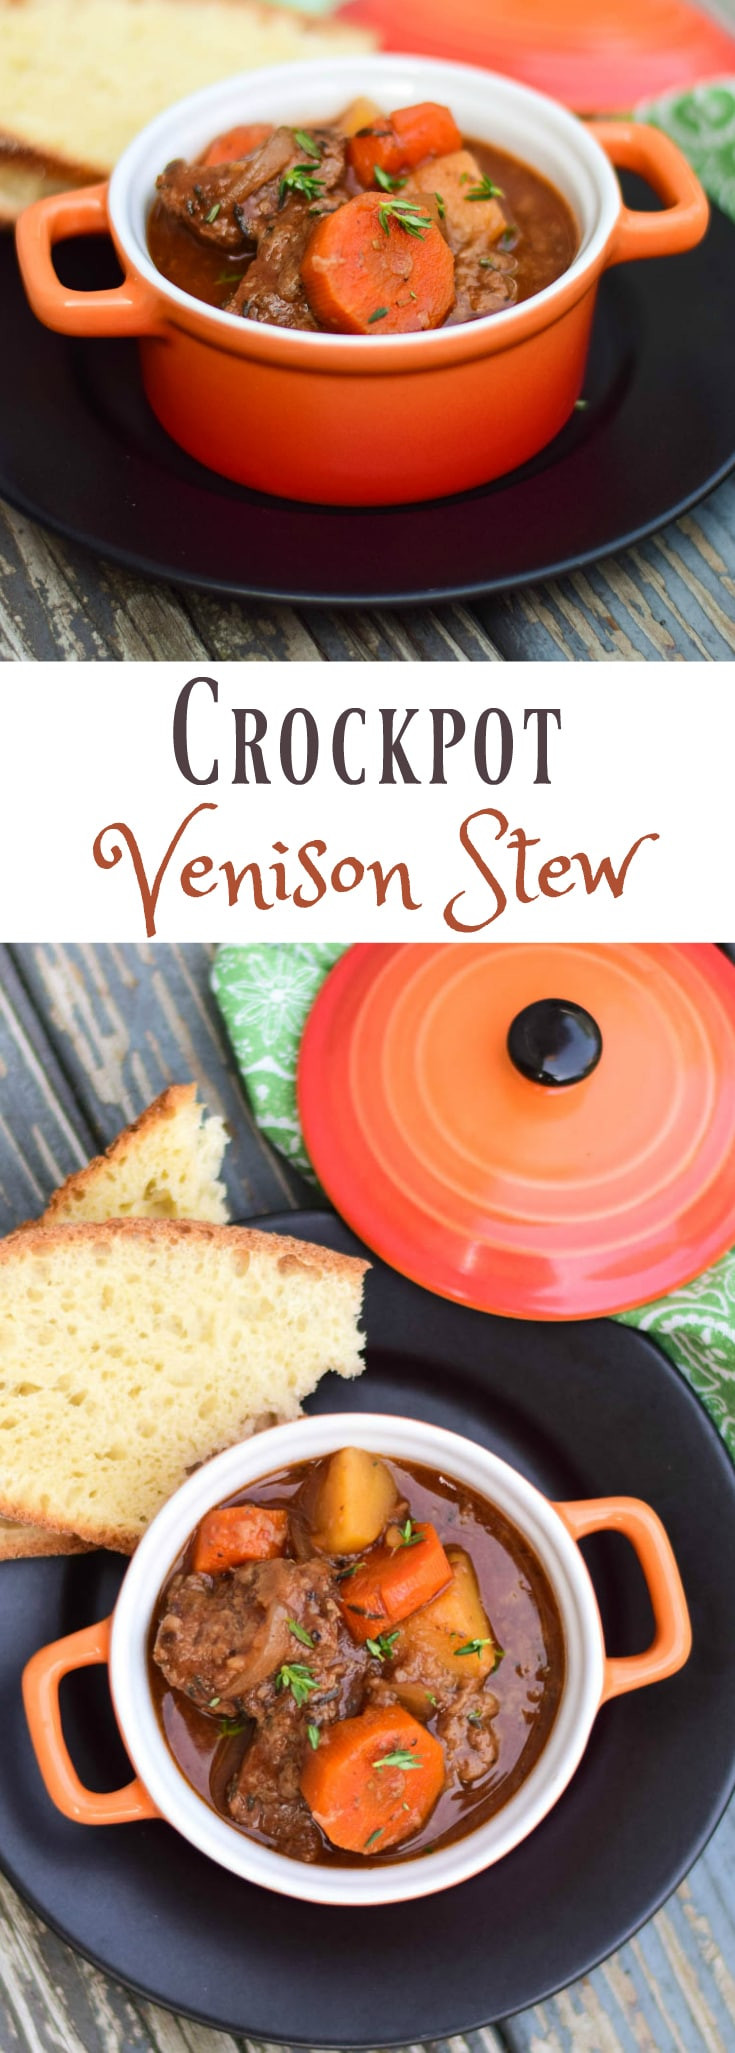 Venison Stew Crock Pot
 Crockpot Venison Stew